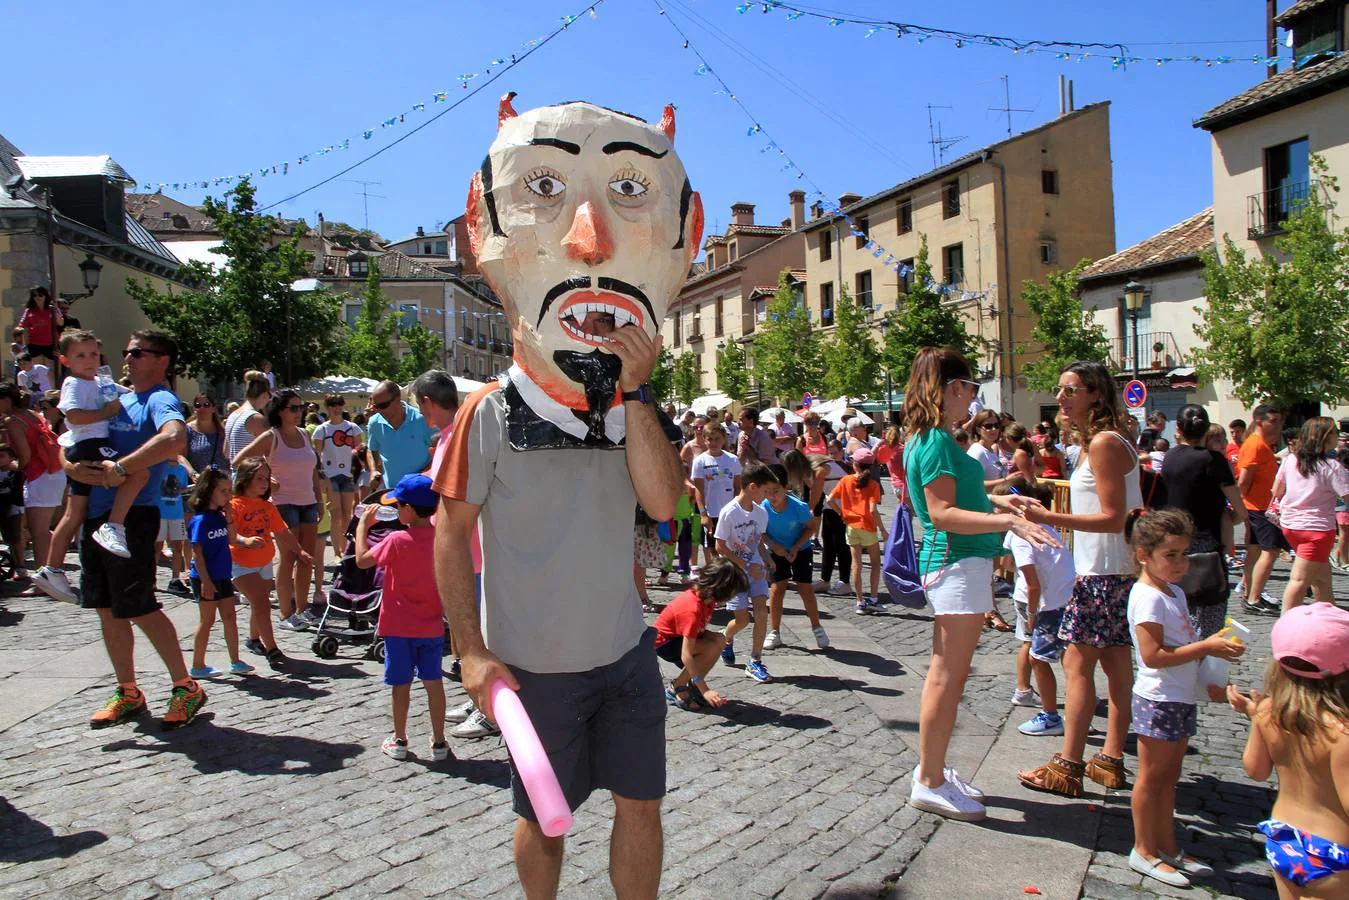 Jornada del lunes en las fiestas de La Granja (Segovia)